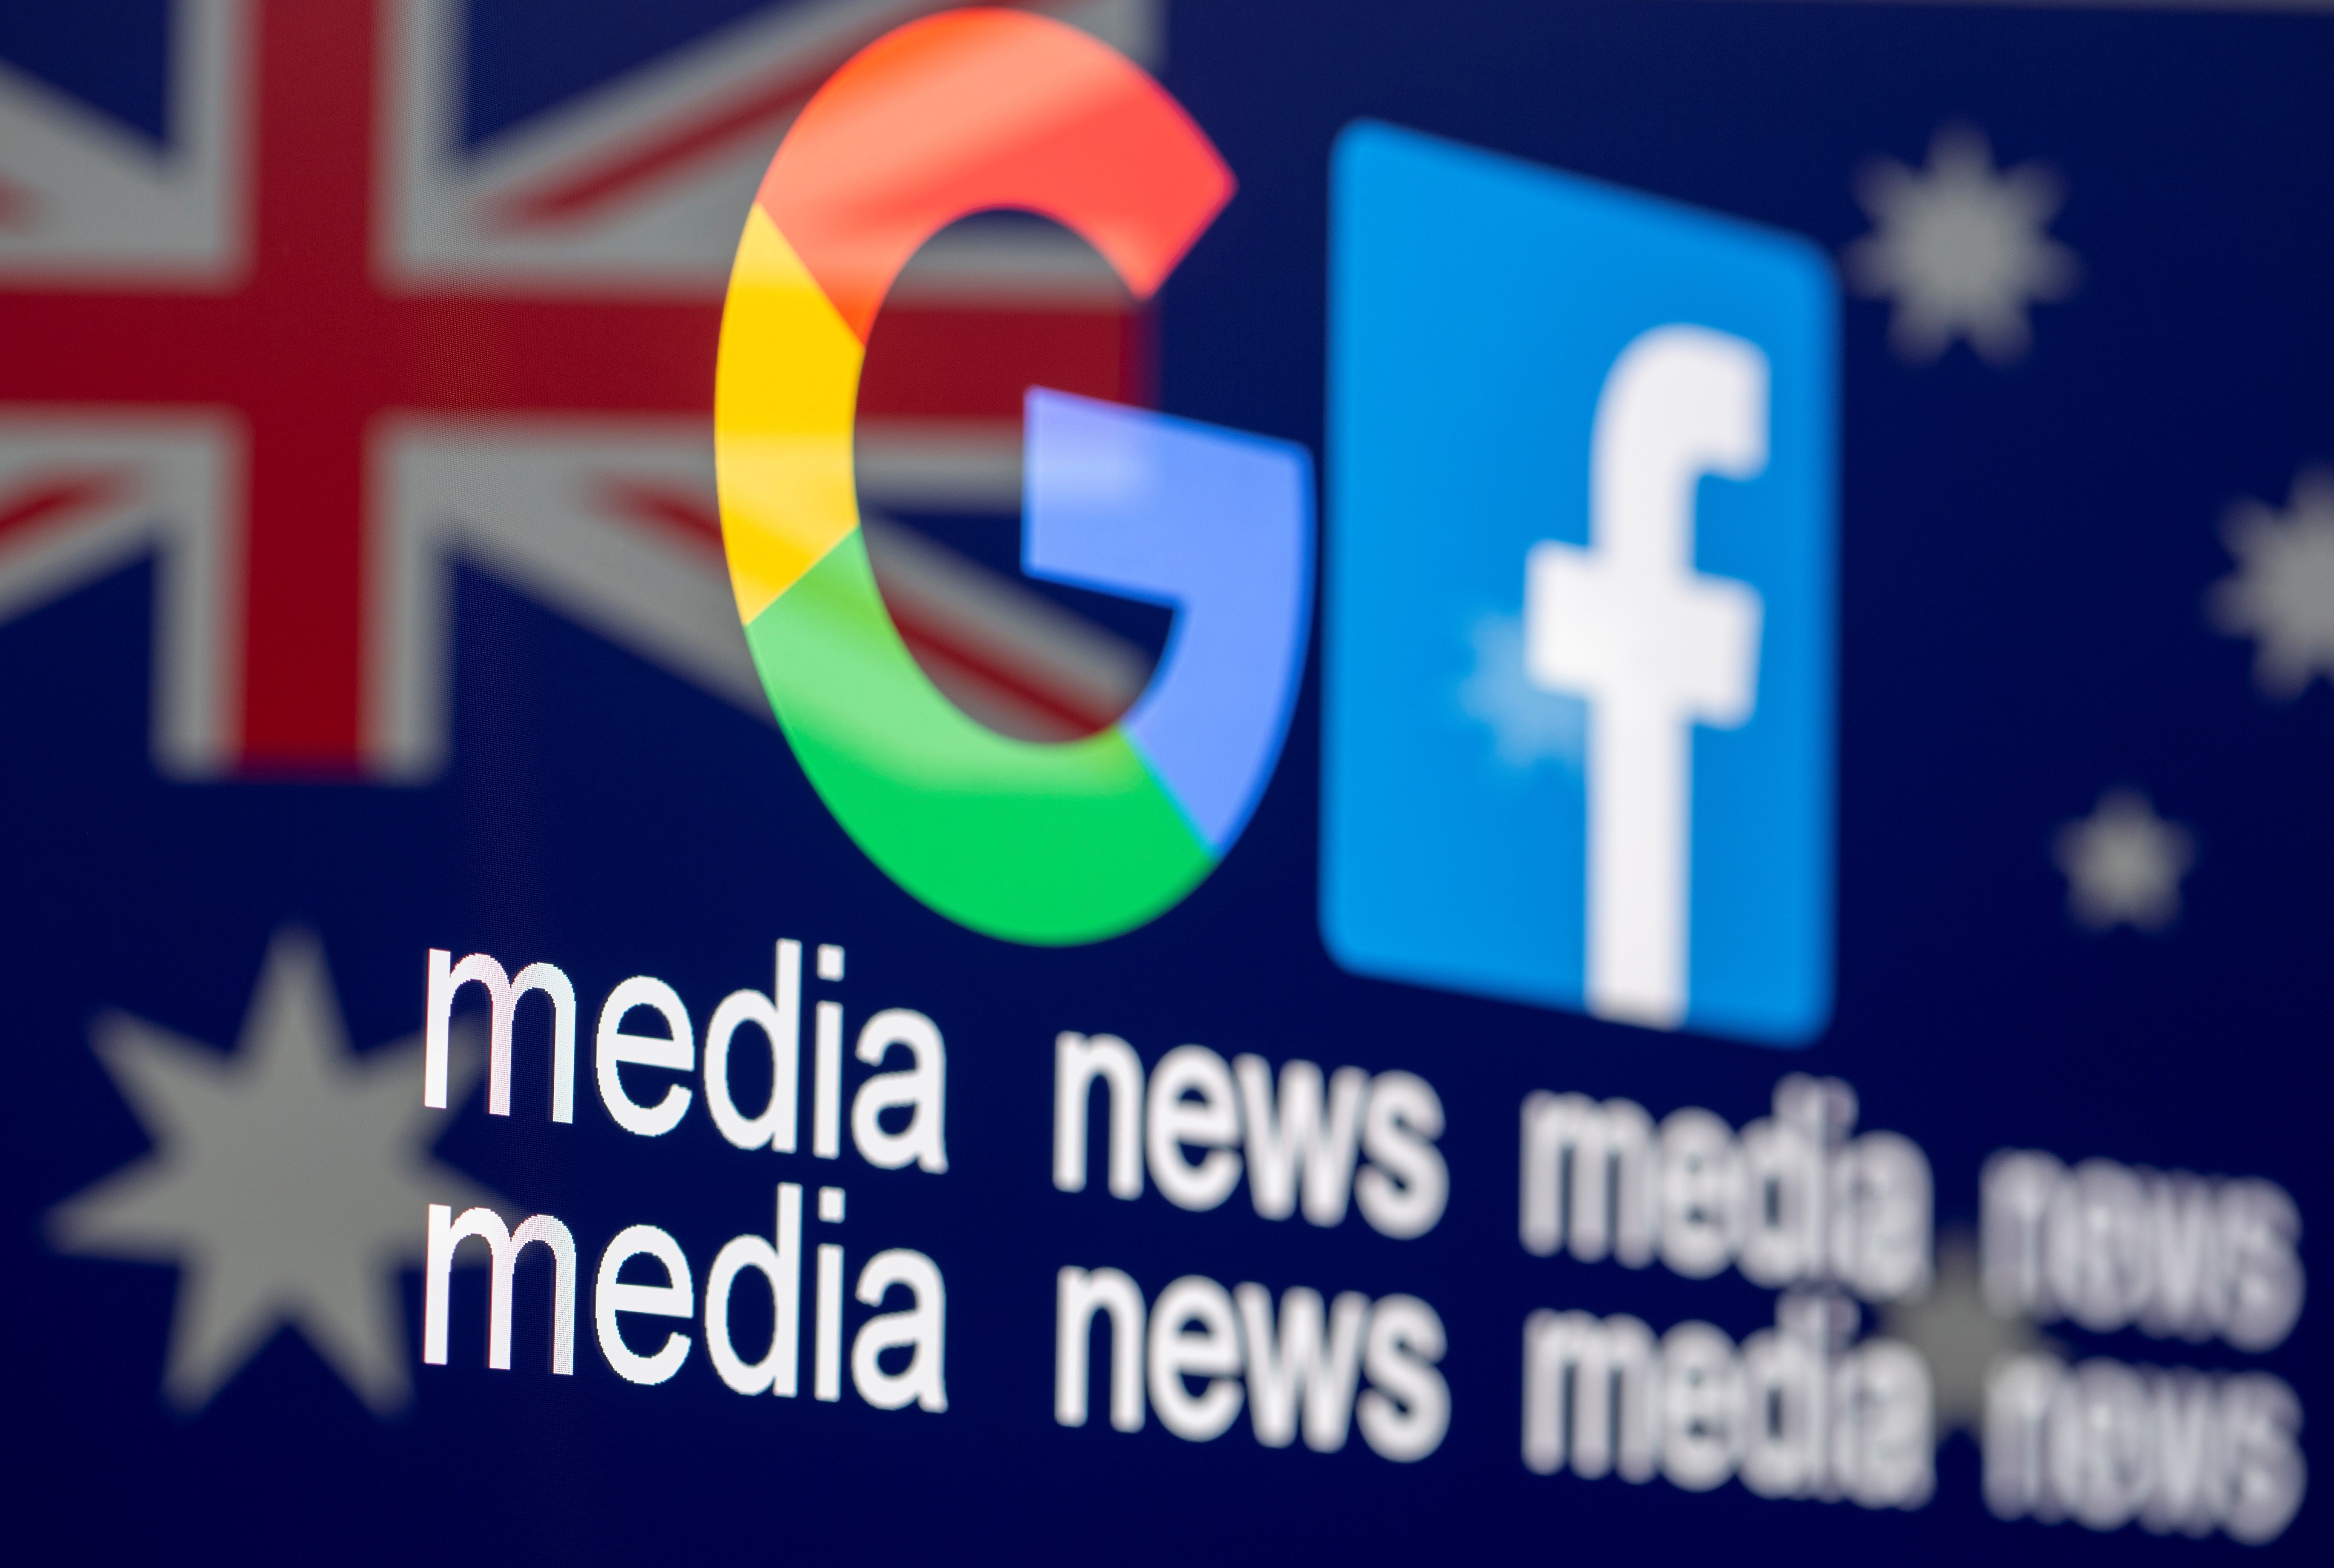 Where Australia’s landmark news content legislation stands